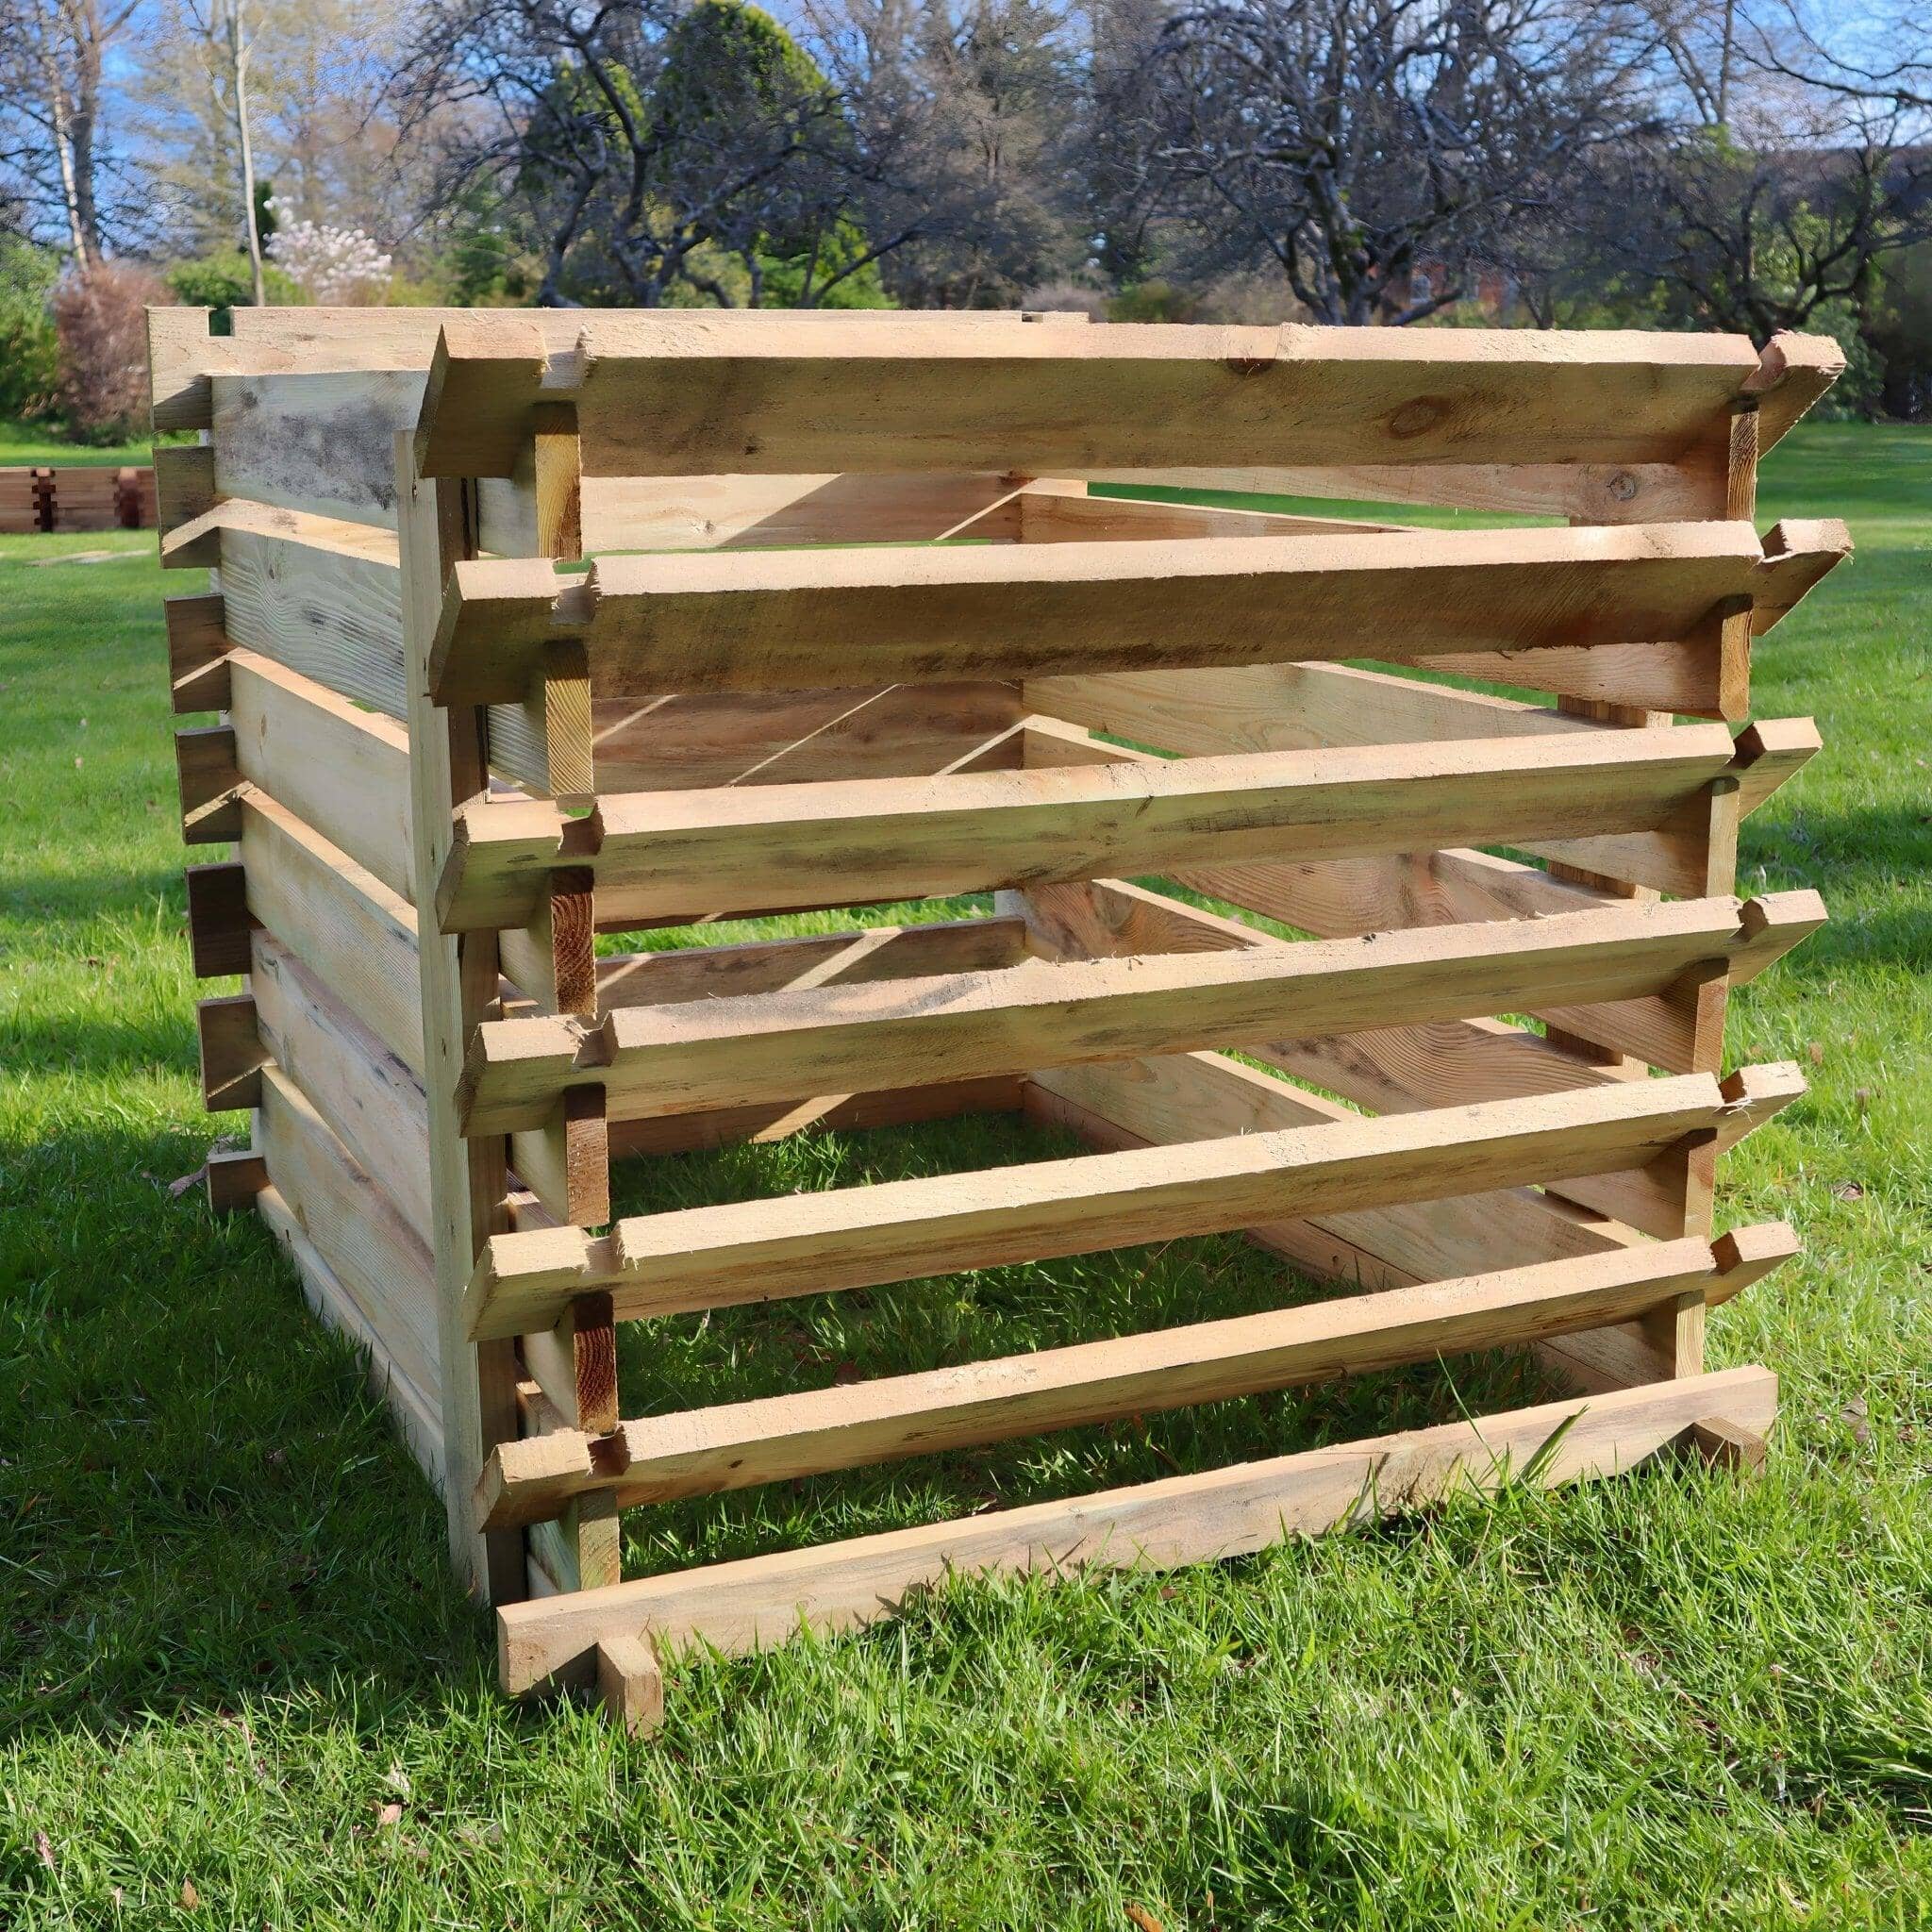 Woven Wood premium make composting bins